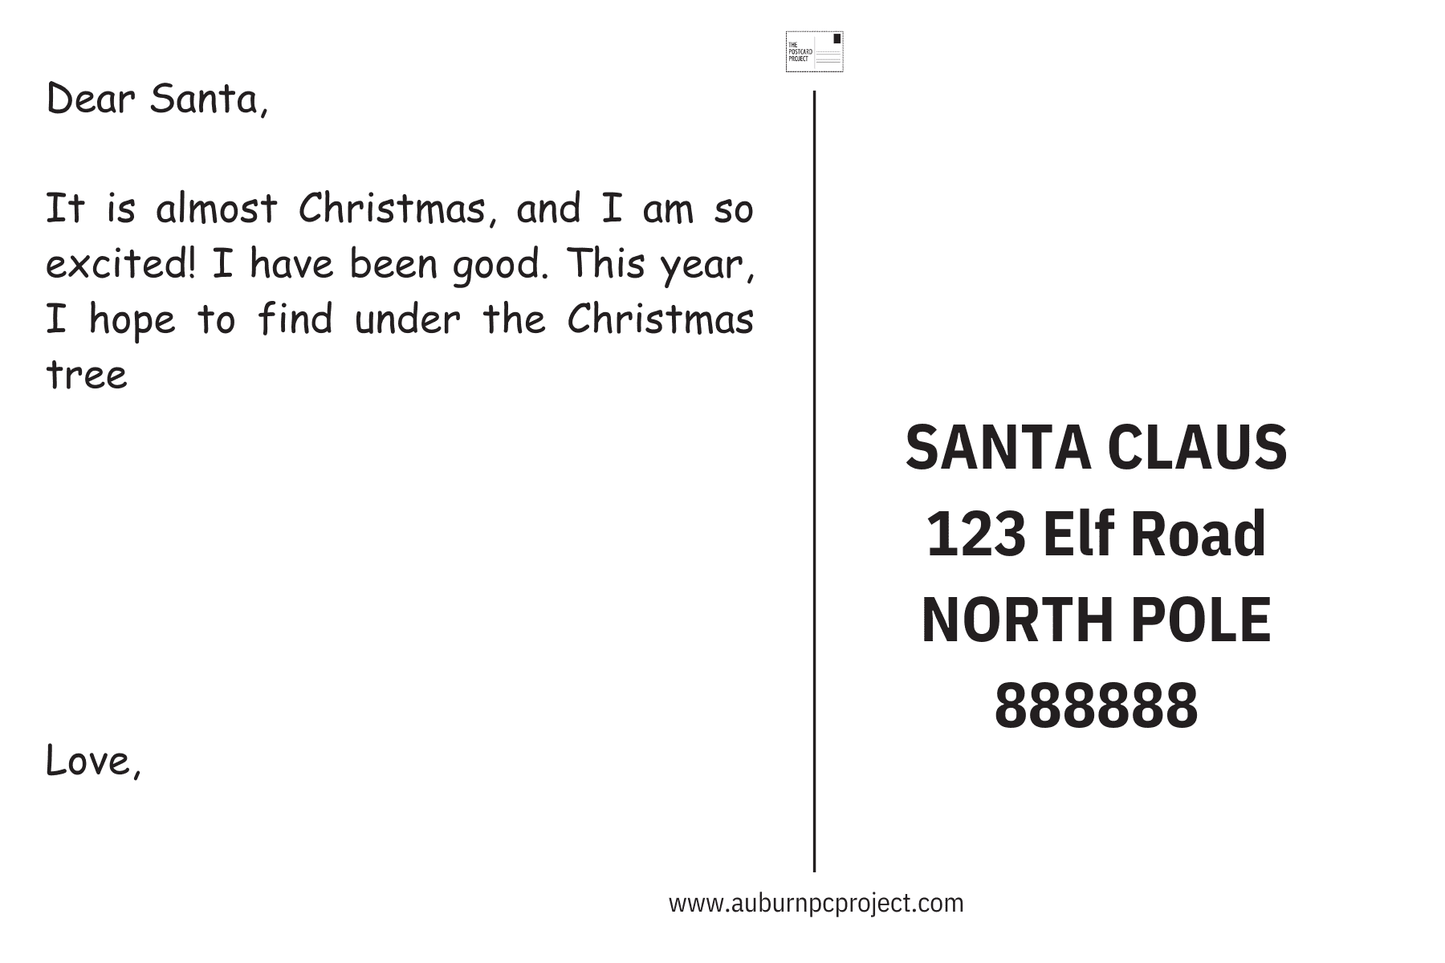 "Dear Santa ..." postcard series